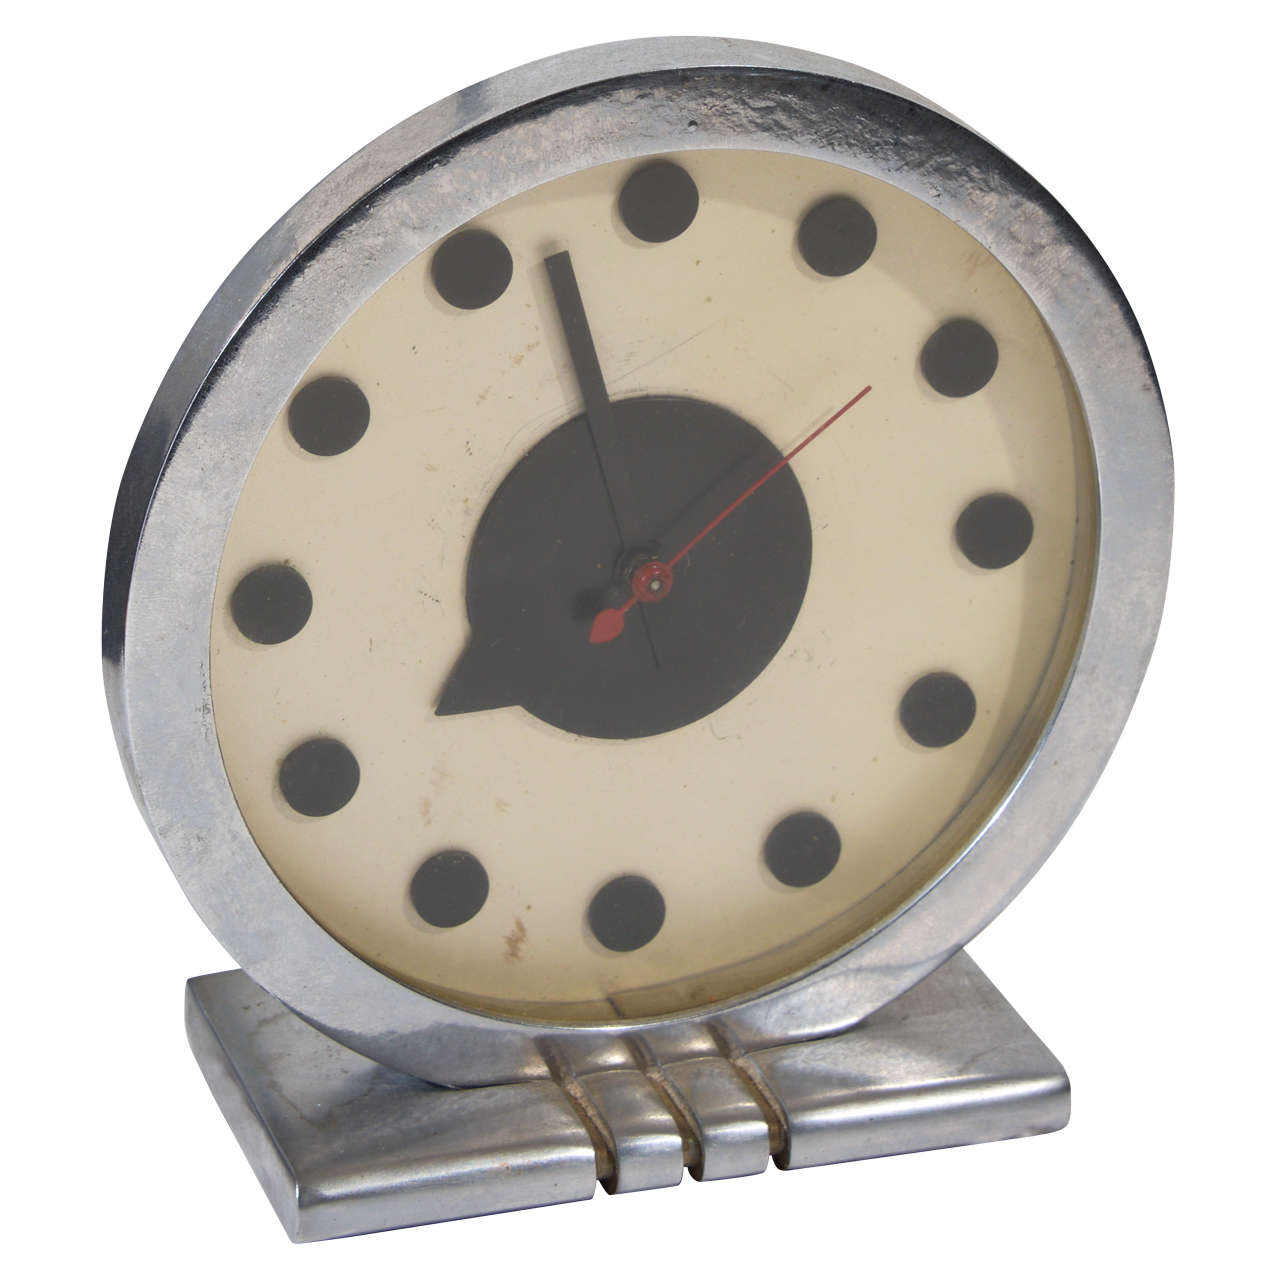 Iconic Rohde for Herman Miller desk clock